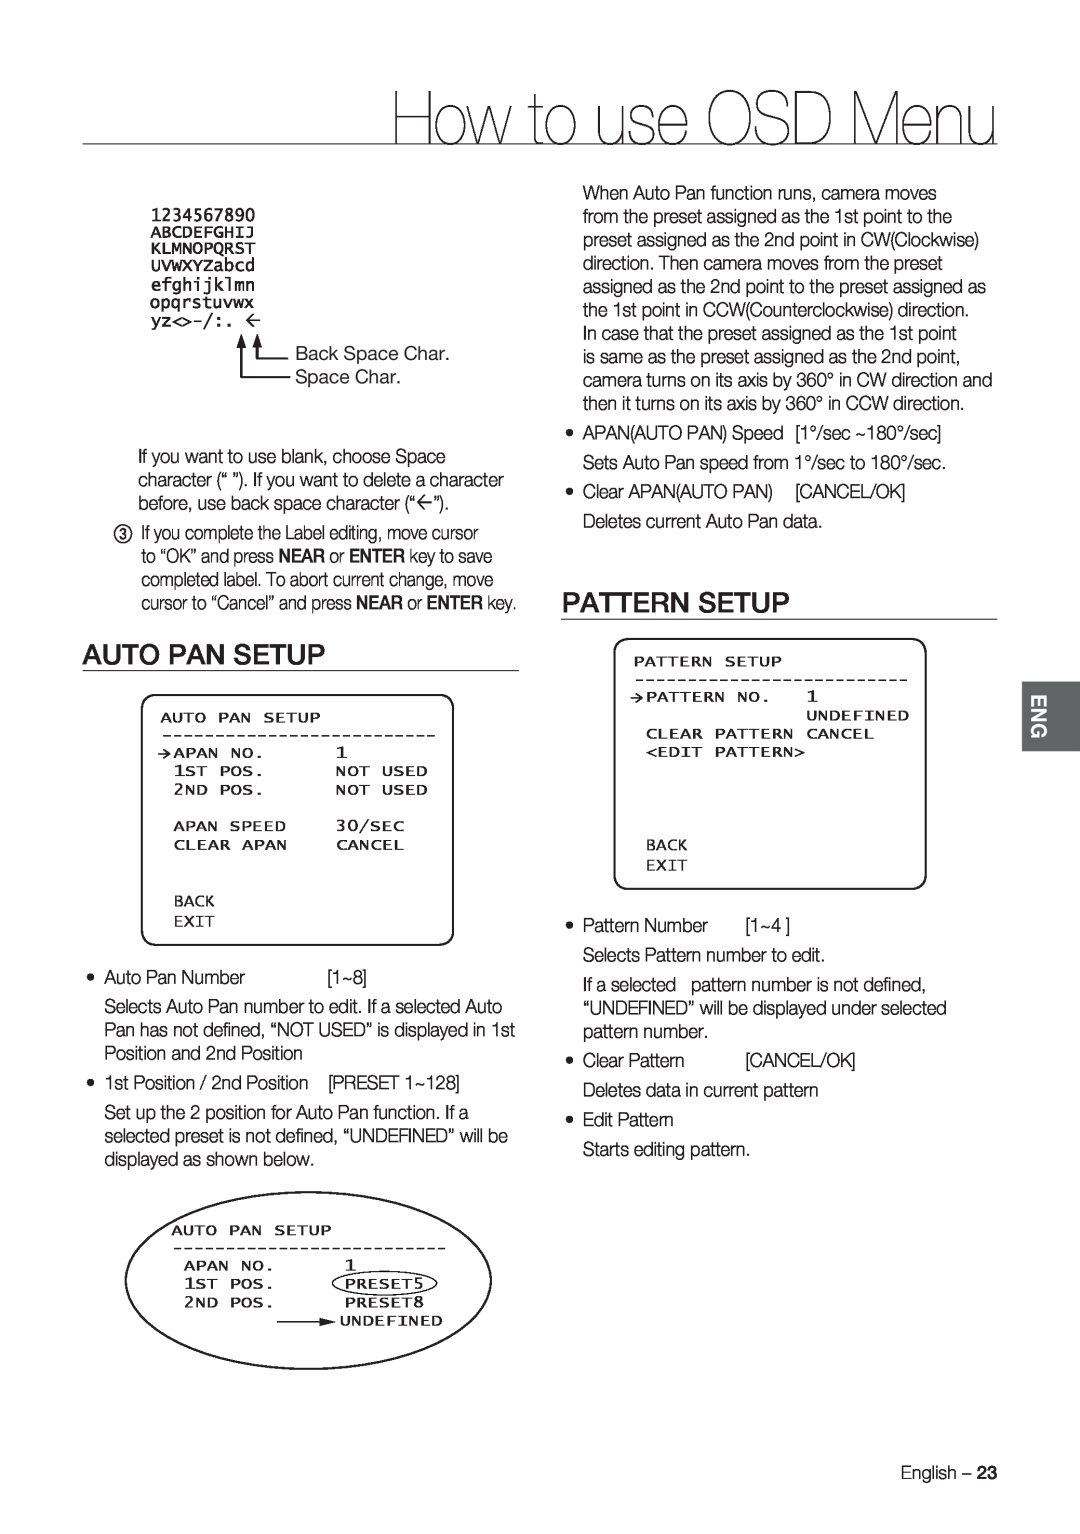 Samsung SCC-C7478P manual Auto Pan Setup, Pattern Setup, How to use OSD Menu 